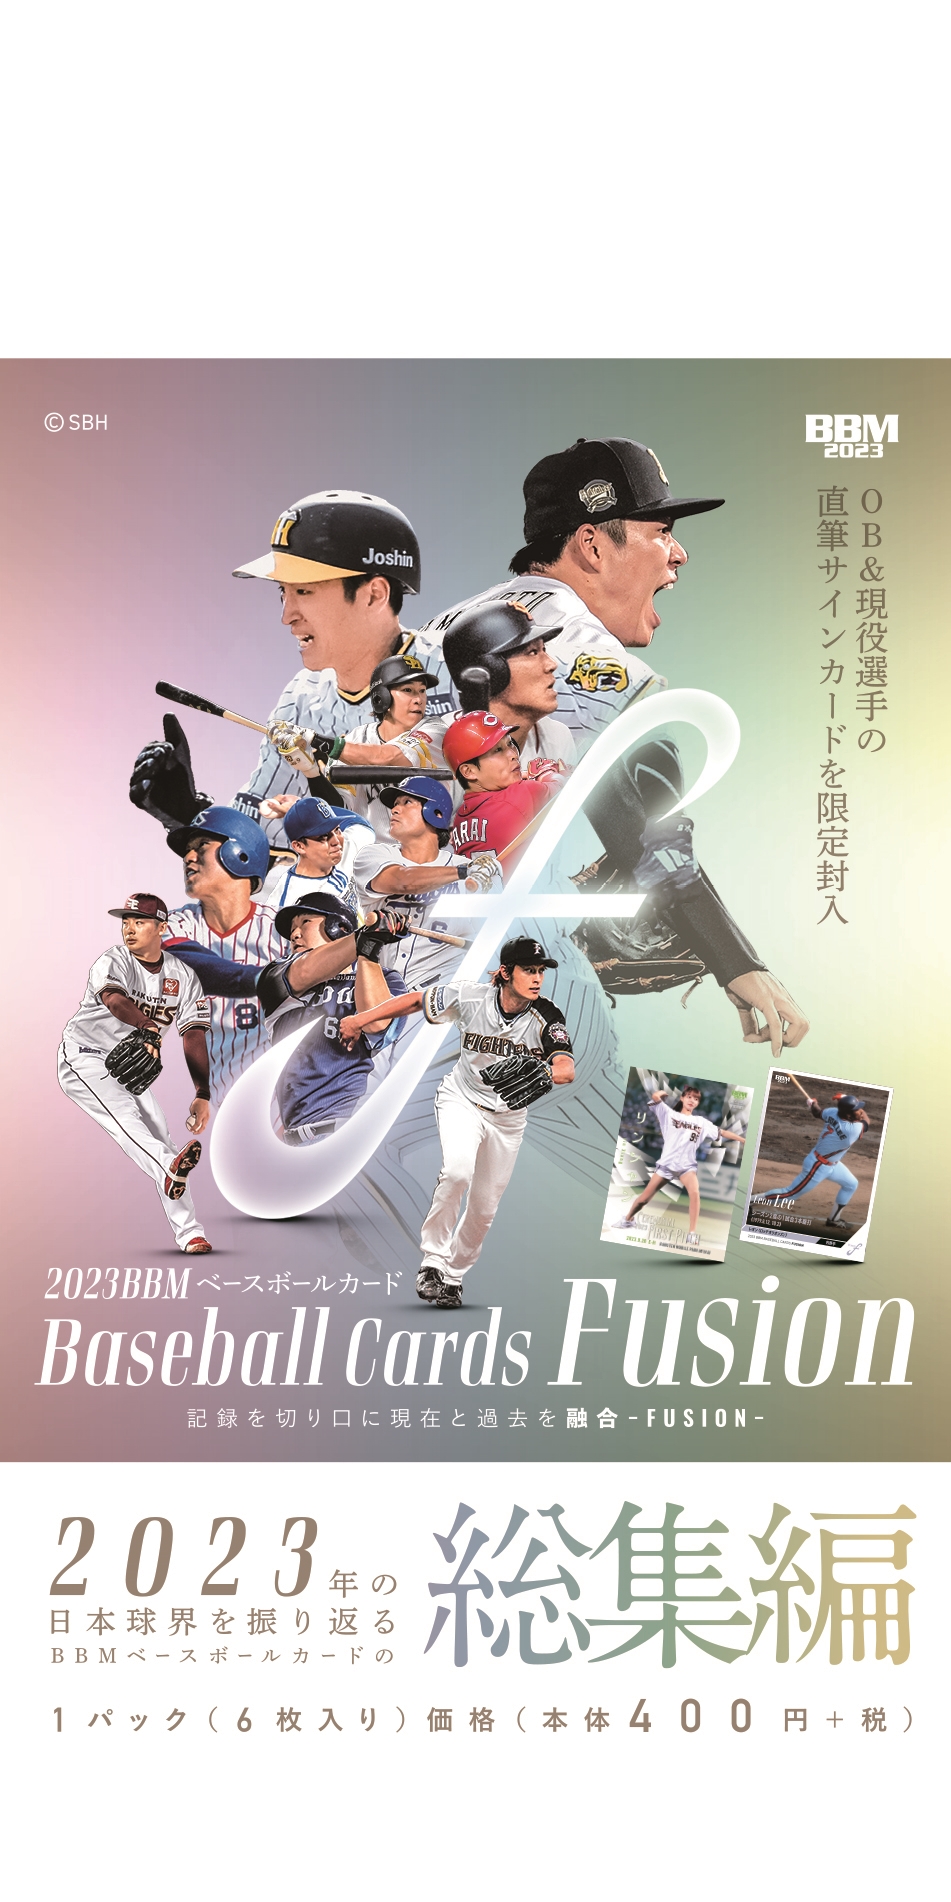 ⚾ BBM ベースボールカード FUSION 2023【製品情報】 | Trading Card